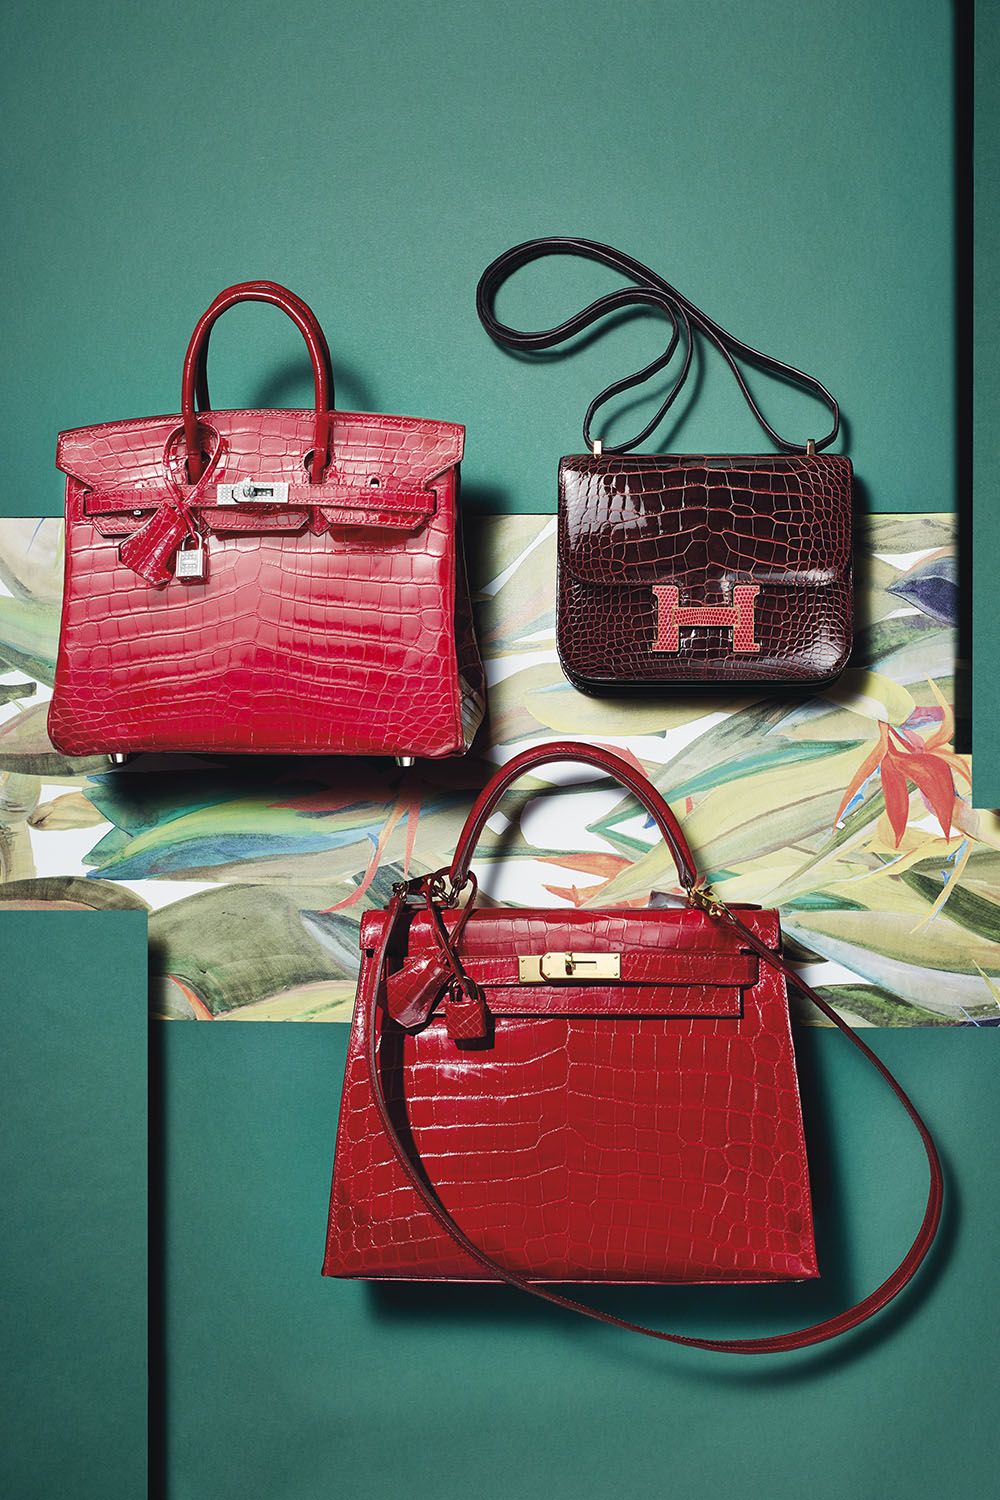 Hermes Birkin handbag sells for £162,500 in Christie's auction